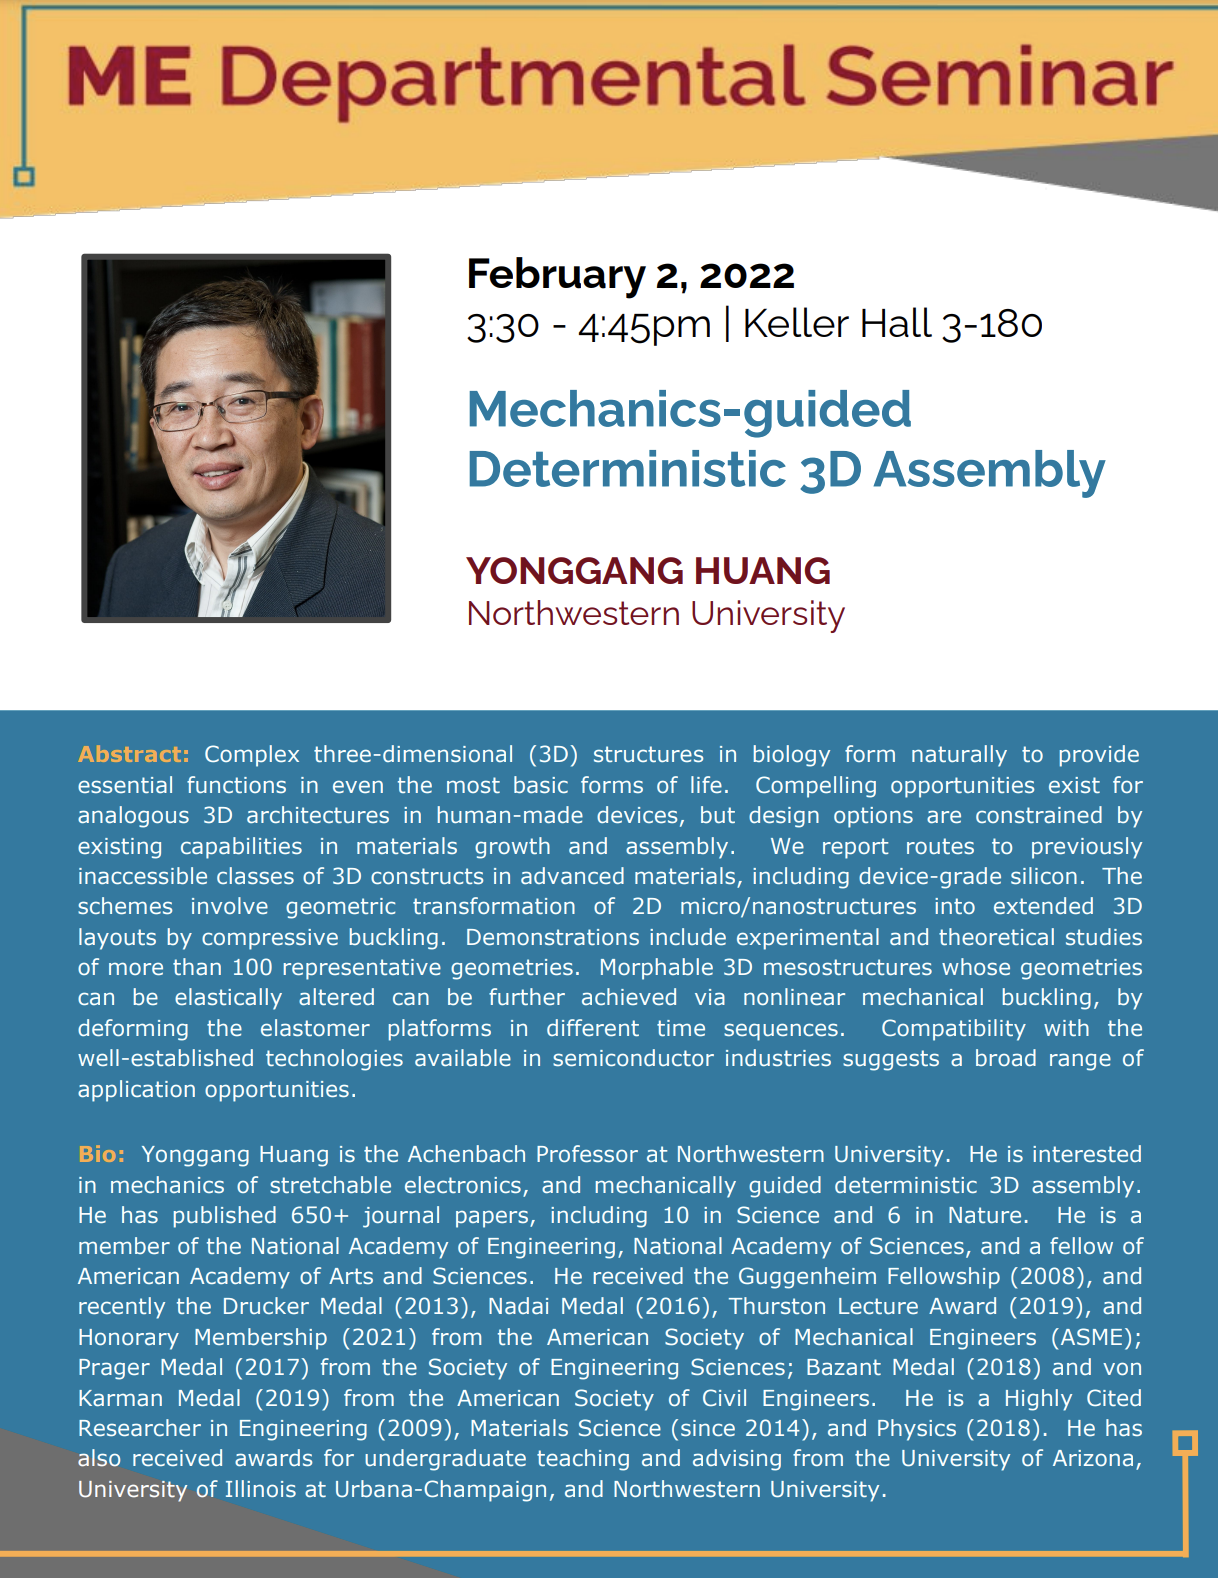 Departmental Seminar flyer for Yonggang Huang